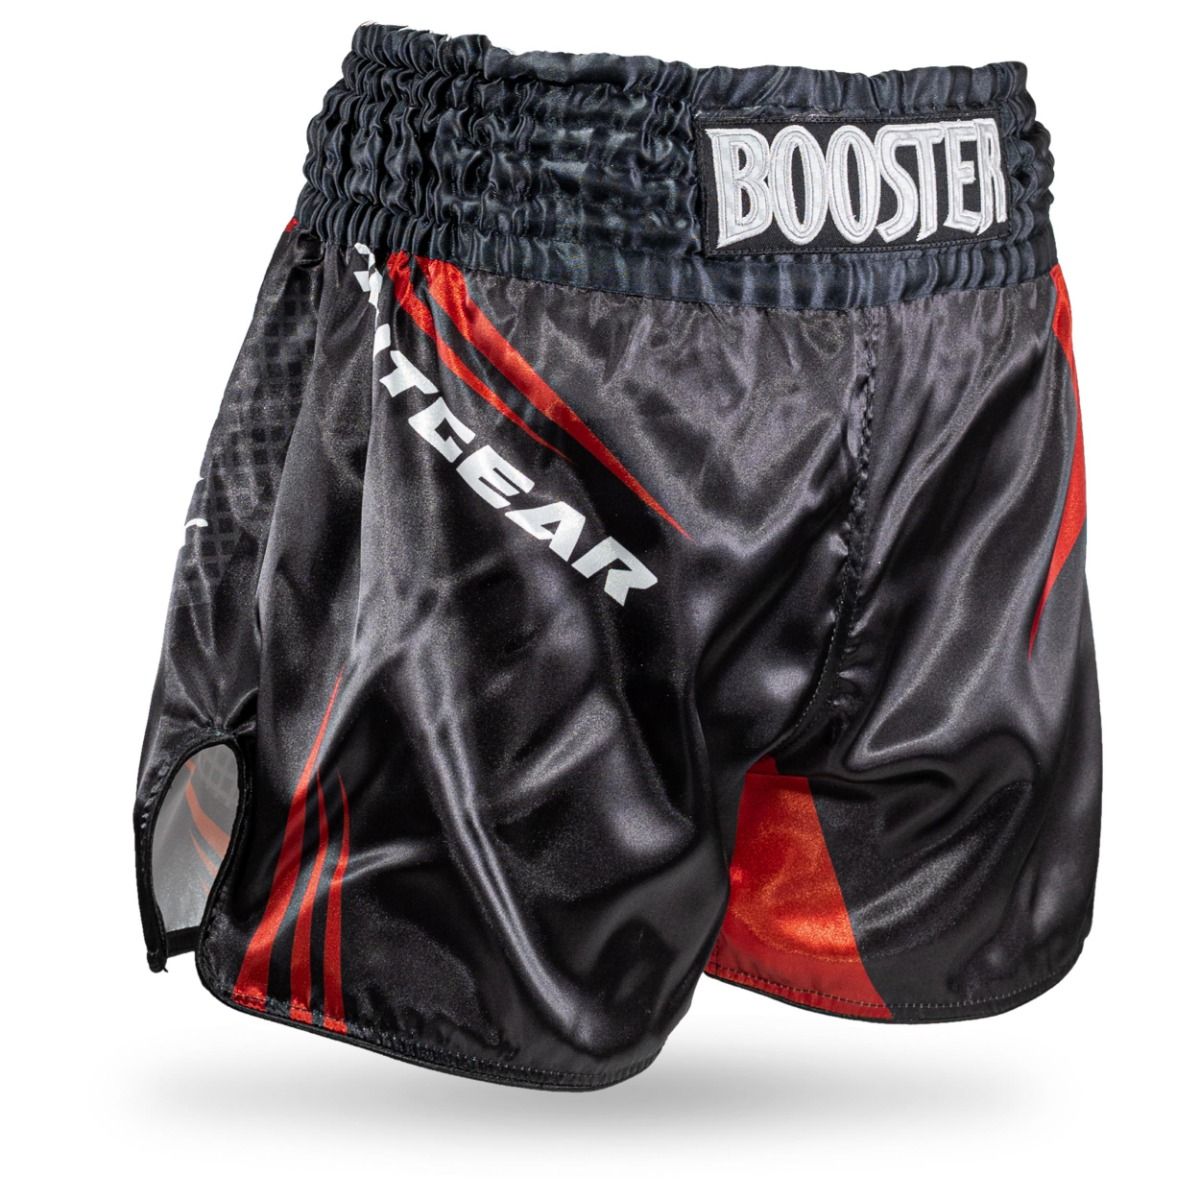 Booster Fight GEAR - Fightshort - korte broek - XPLOSION 2 -Zwart - Rood - Black - Red